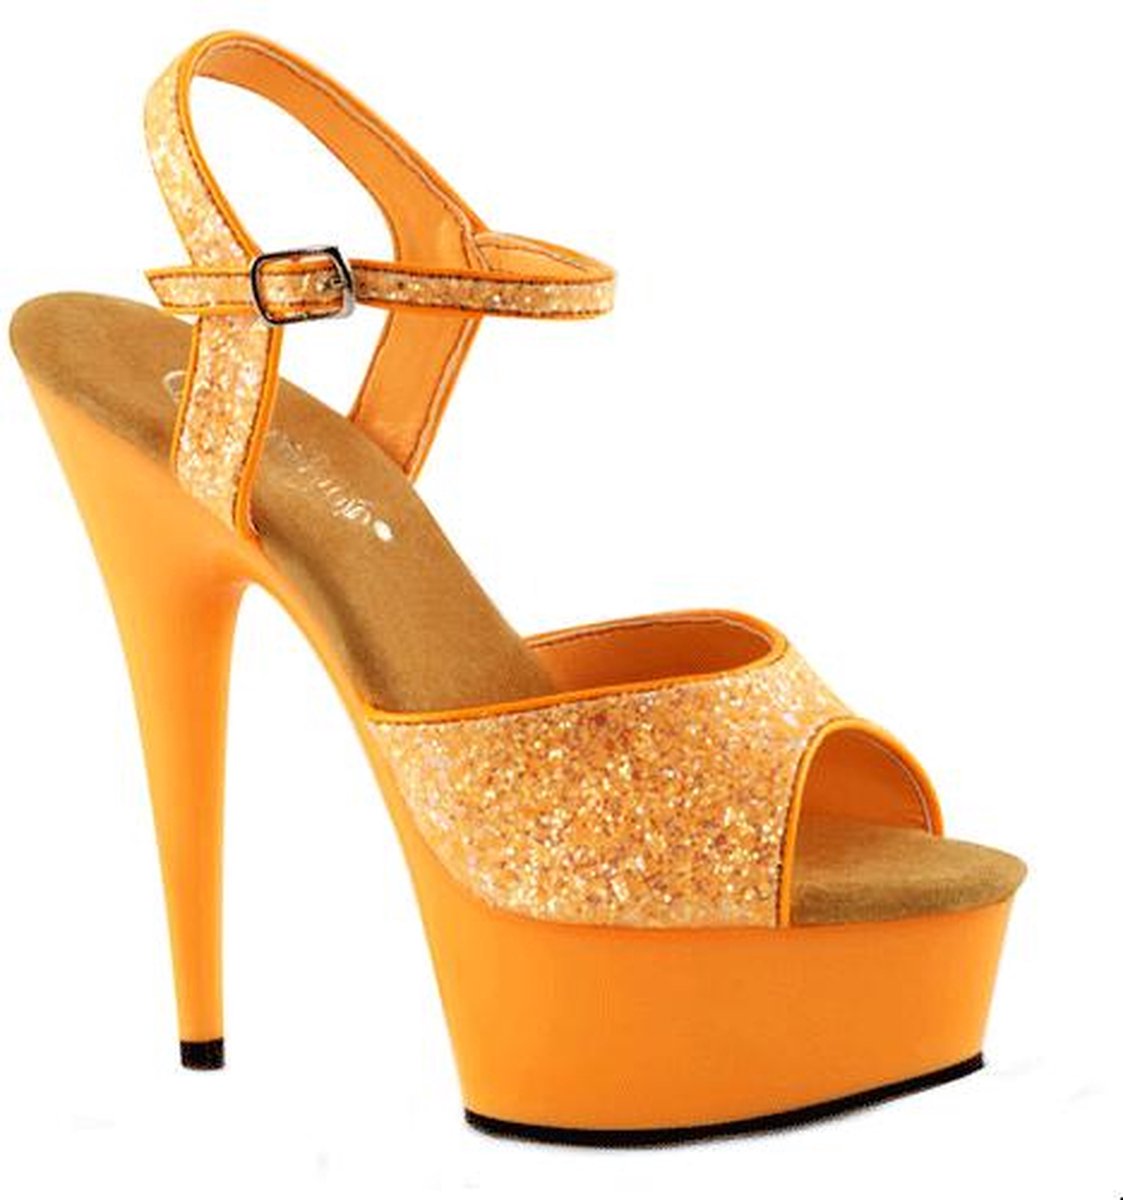 Neon oranje glitter sandalen Caydence 40 - Merkloos